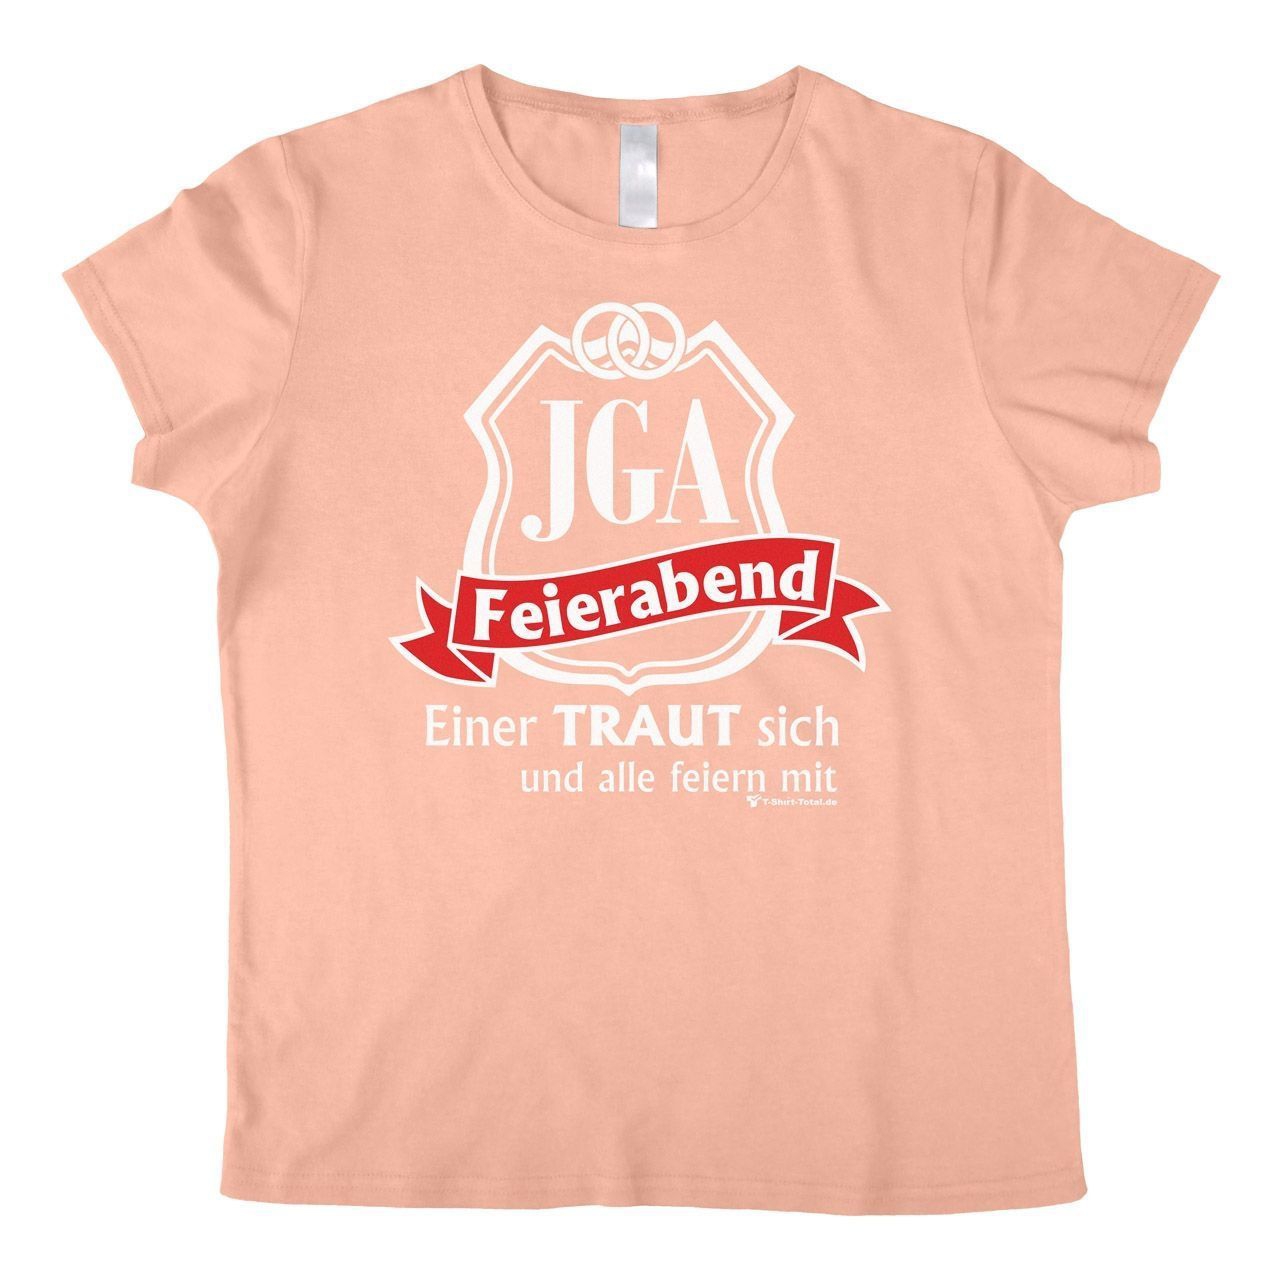 JGA Feierabend Woman T-Shirt rosa Small